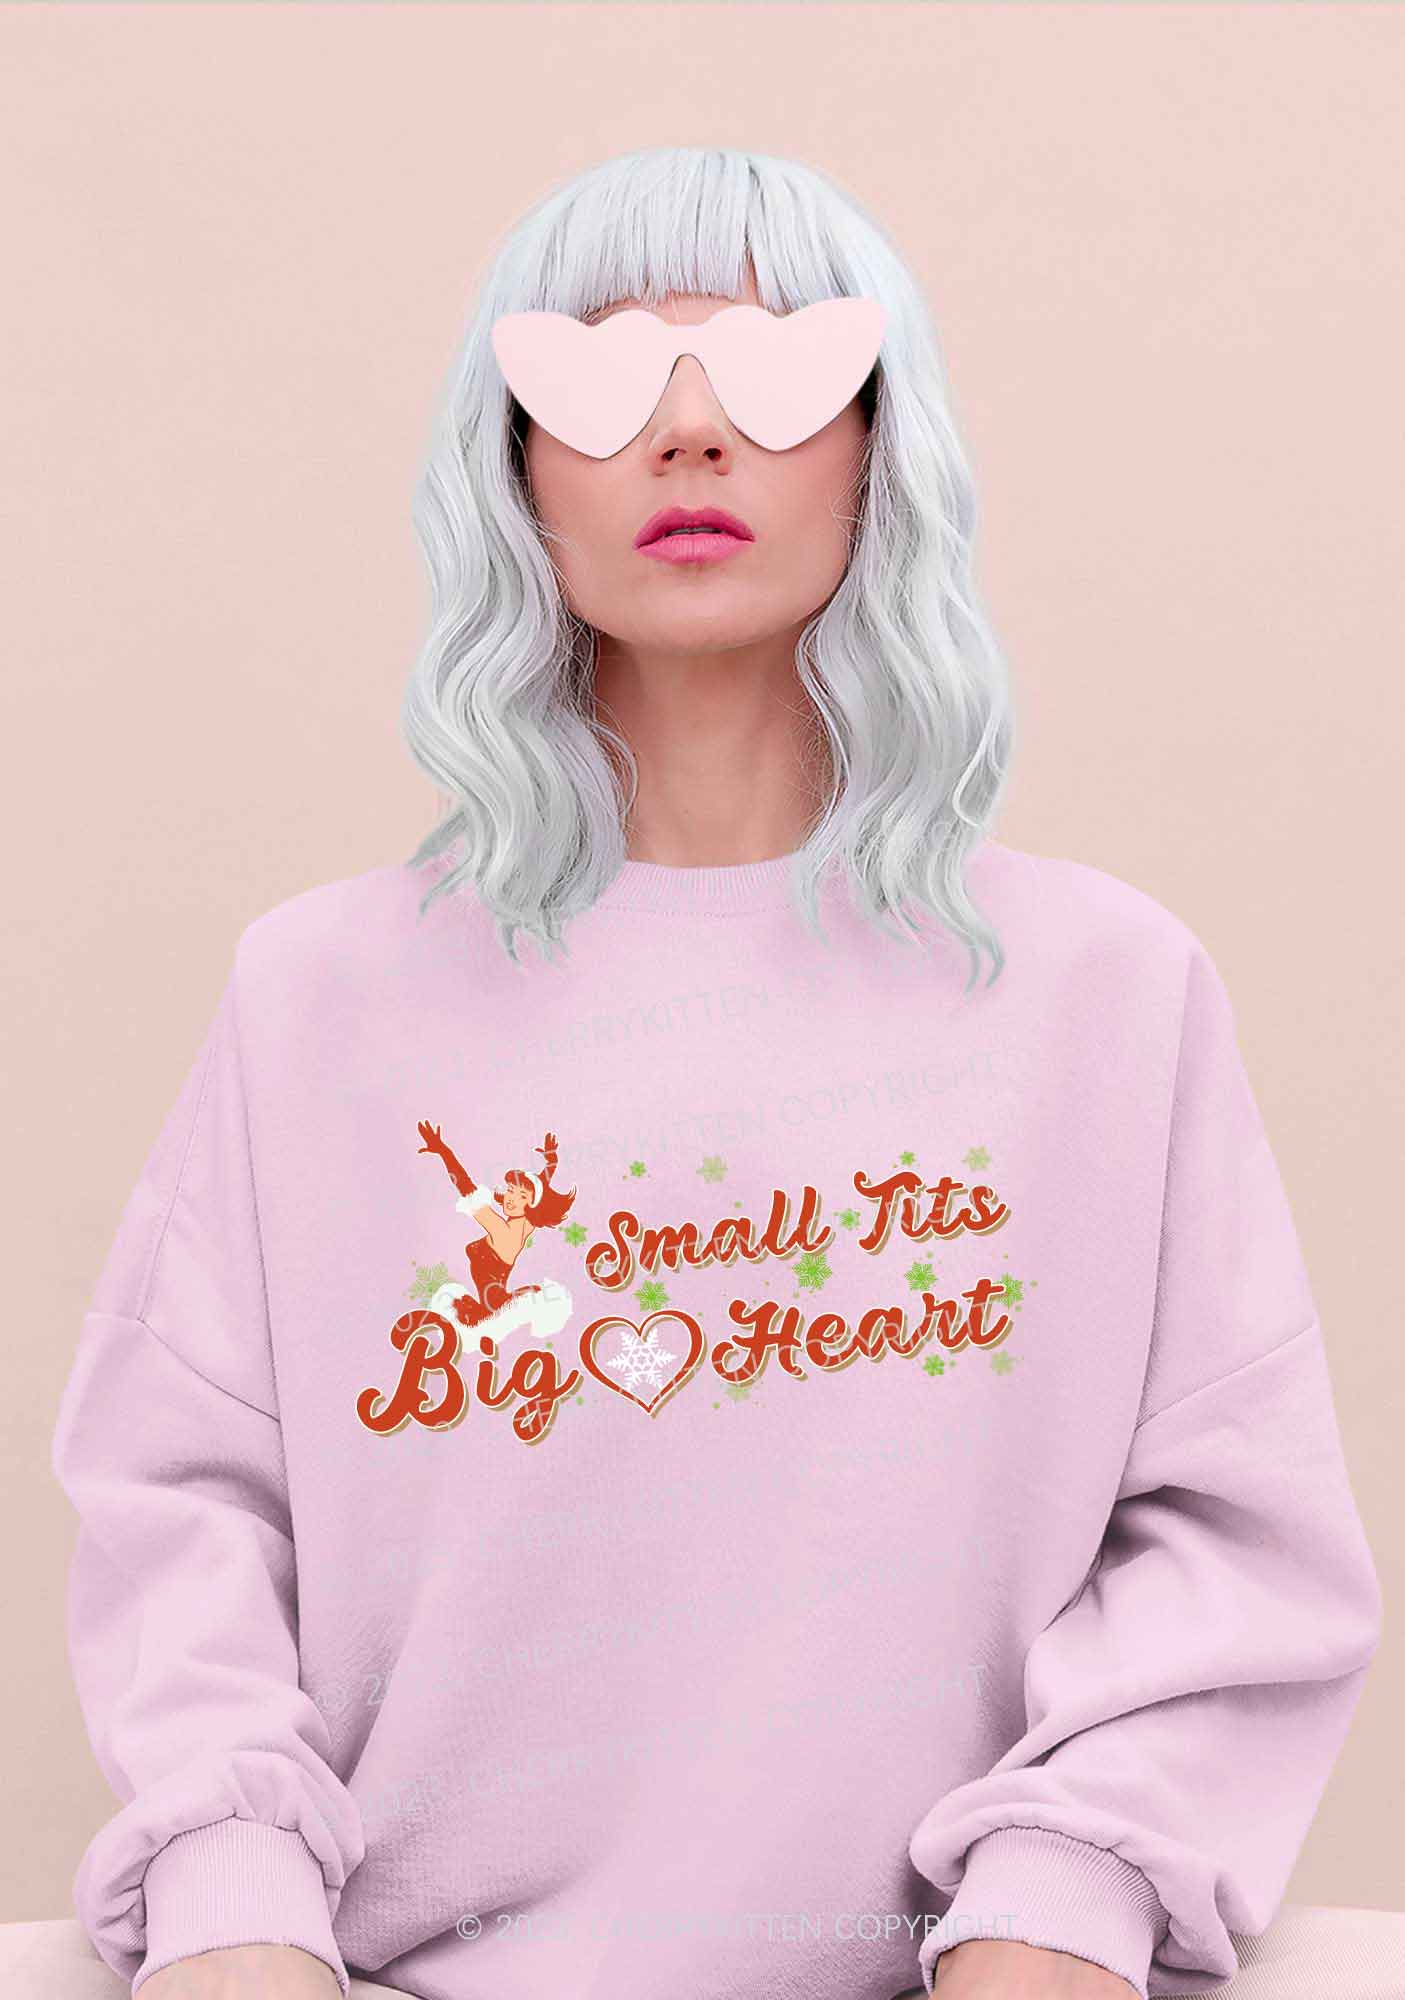 Small But Big Heart Christmas Y2K Sweatshirt Cherrykitten